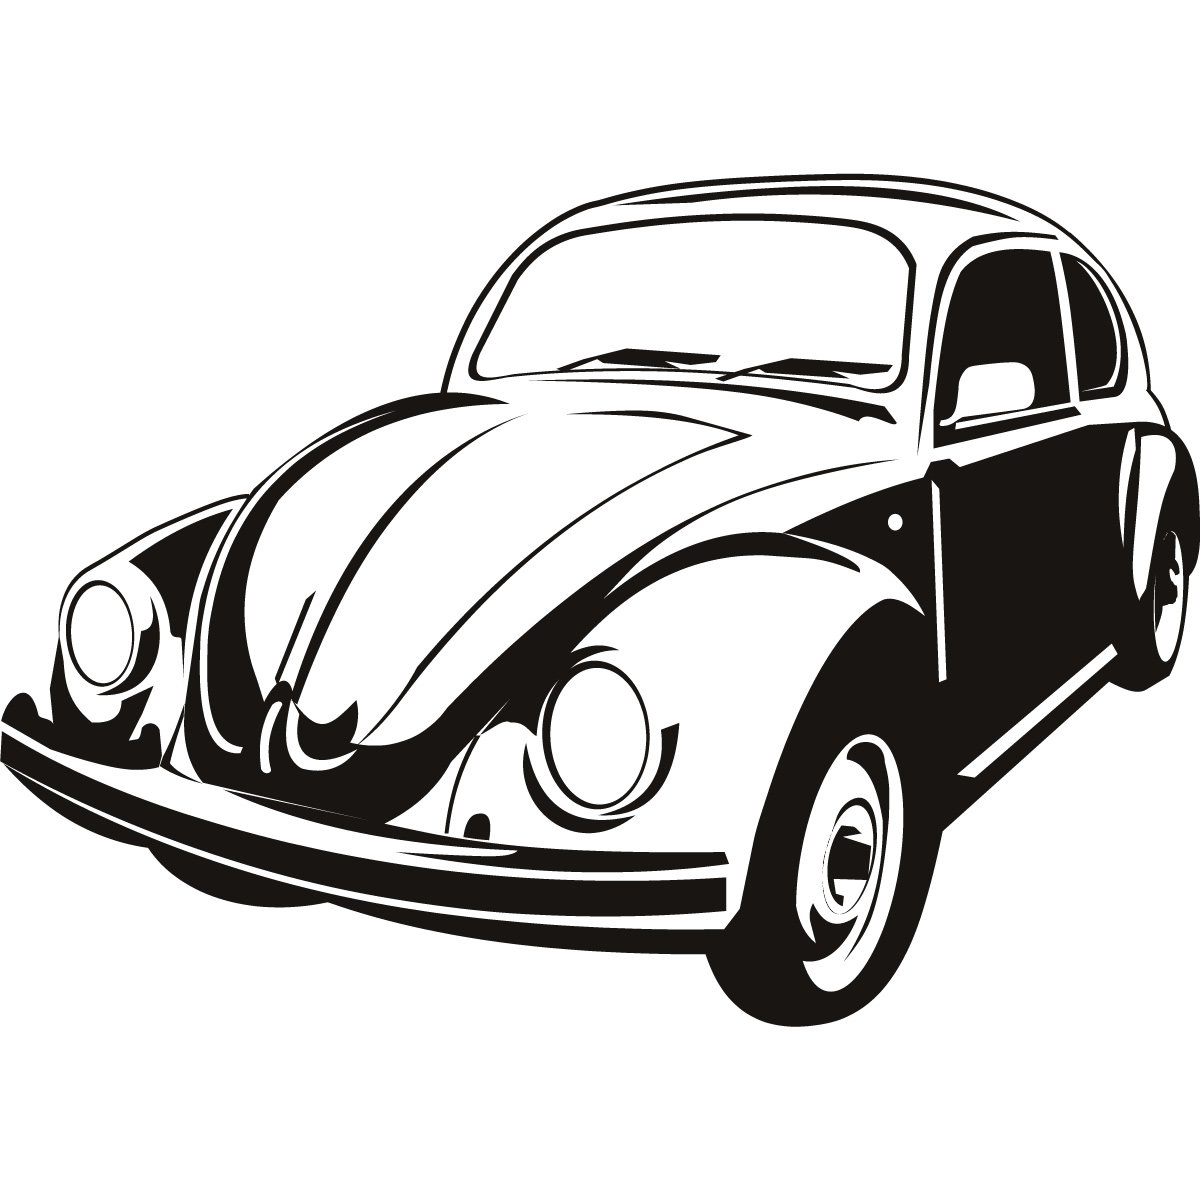 Classic VW Beetle Decal